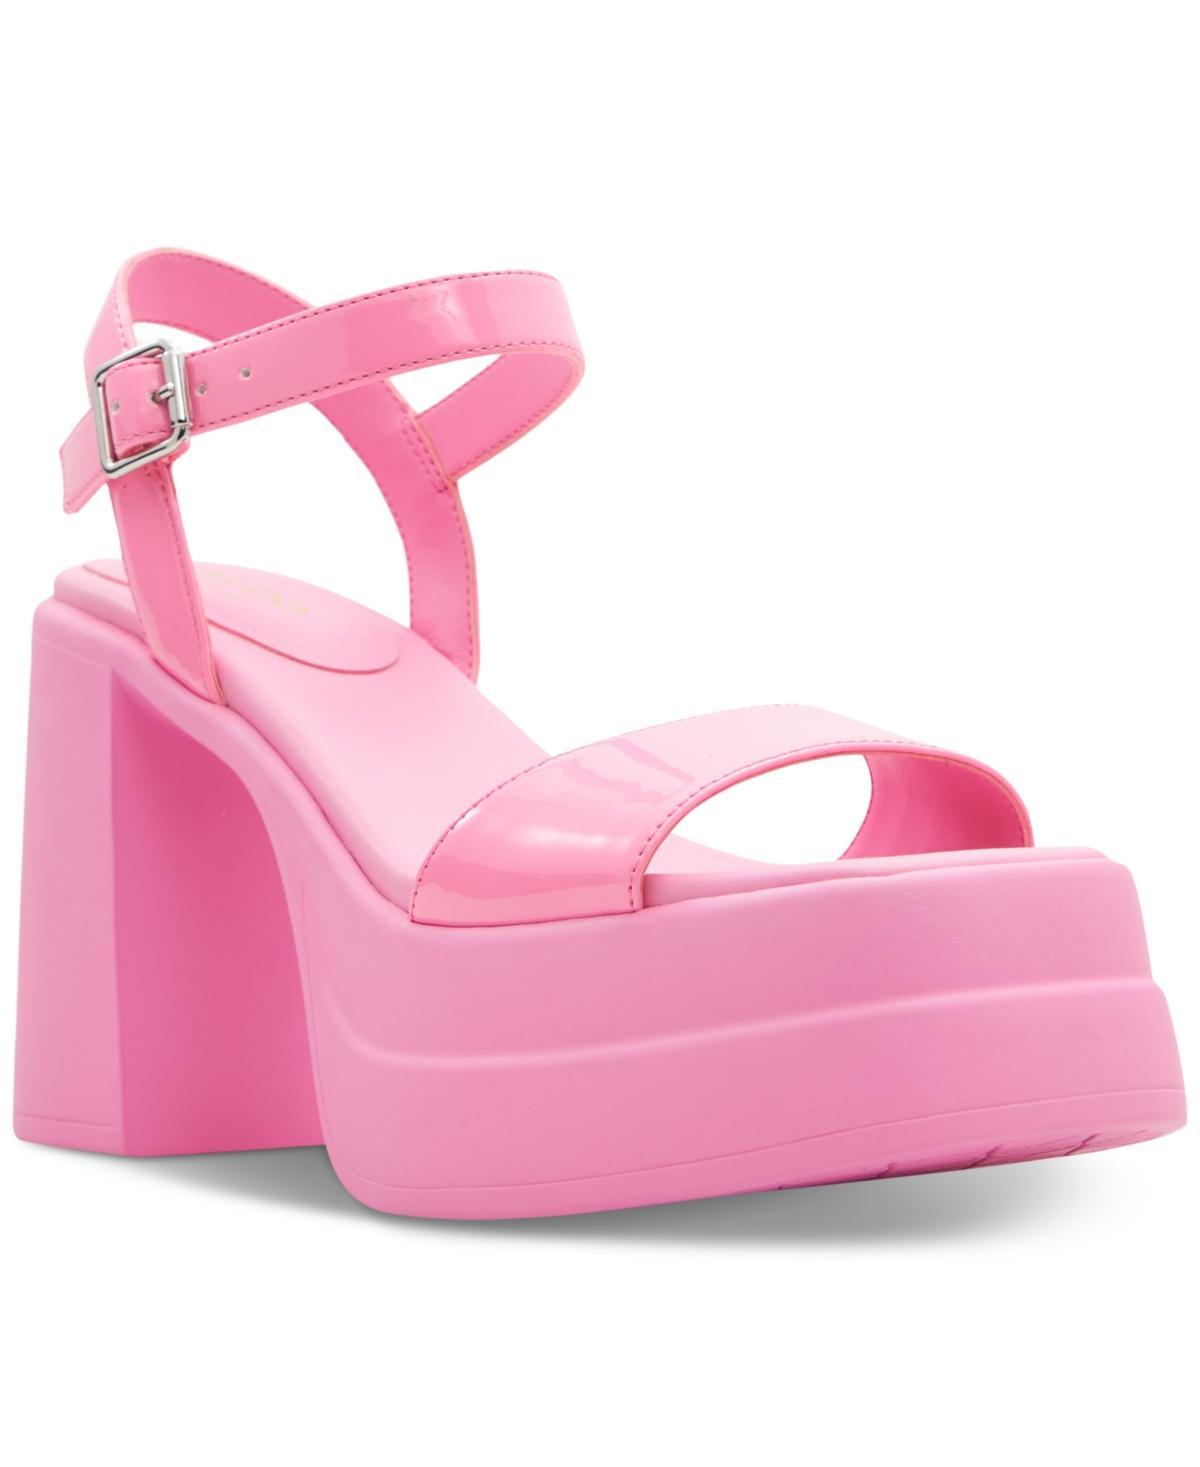 ALDO Taina Block Heel Platform Sandal Product Image